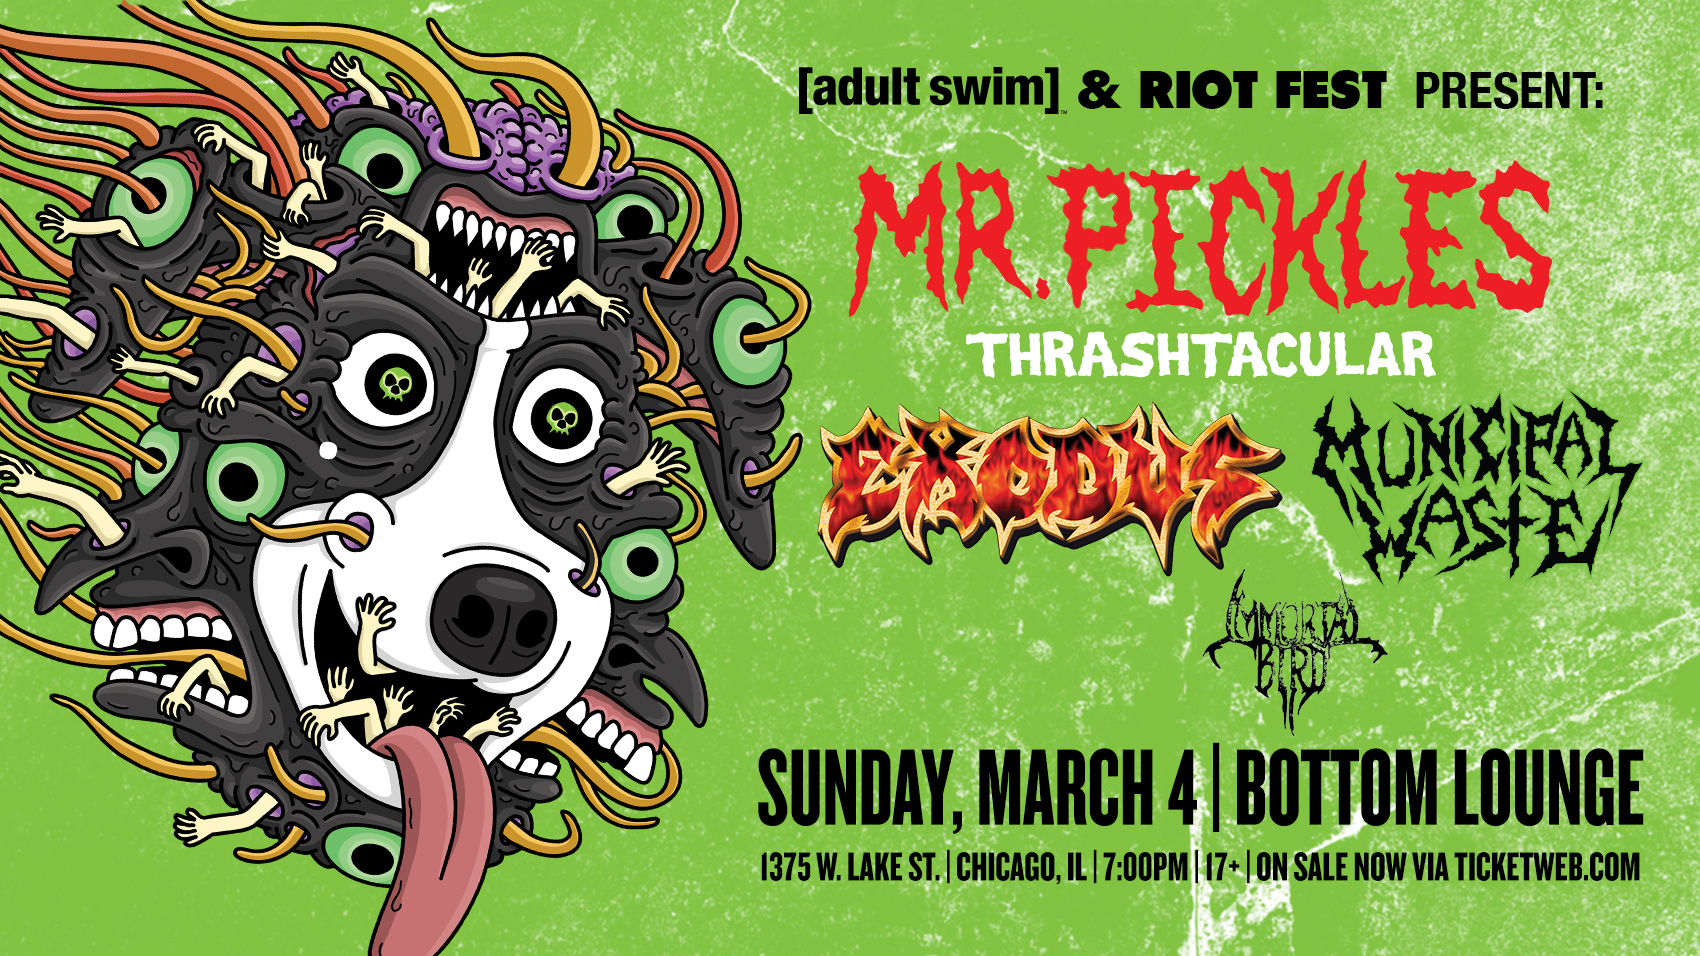 Mr. Pickles Thrash-tacular - Riot Fest